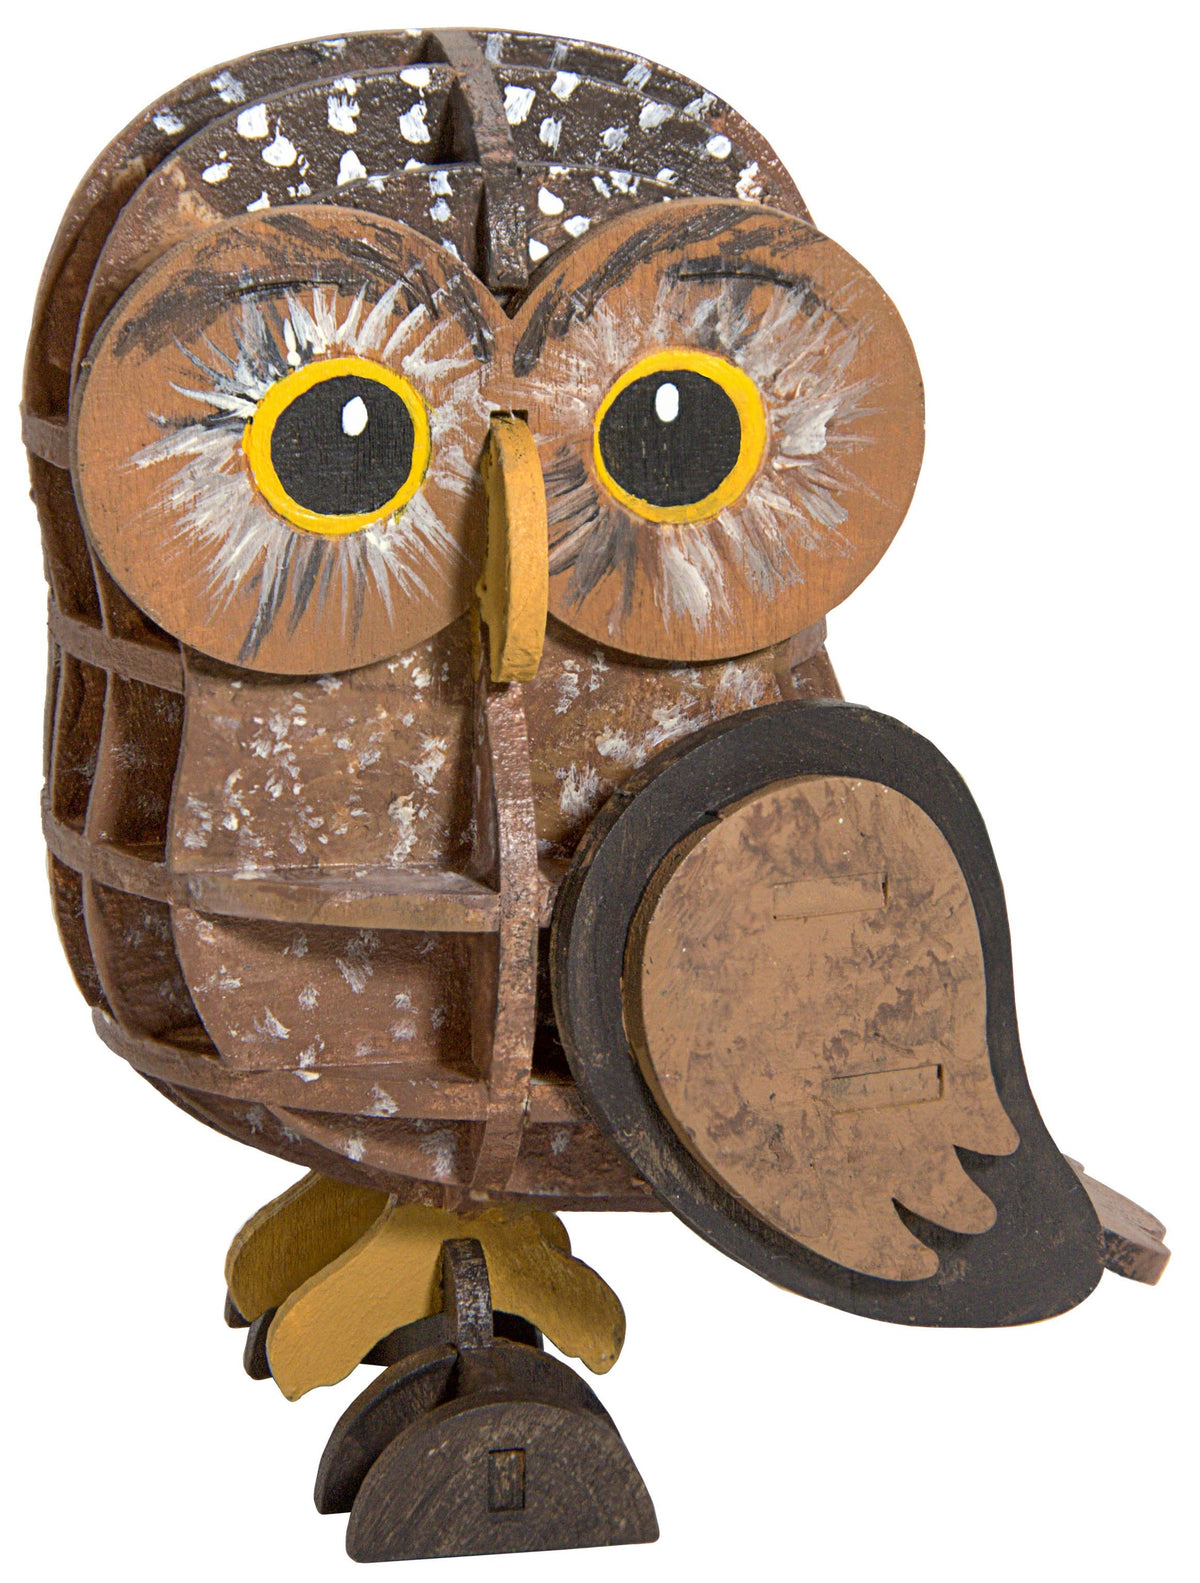 Incredibuilds Owl 3D Wood Model